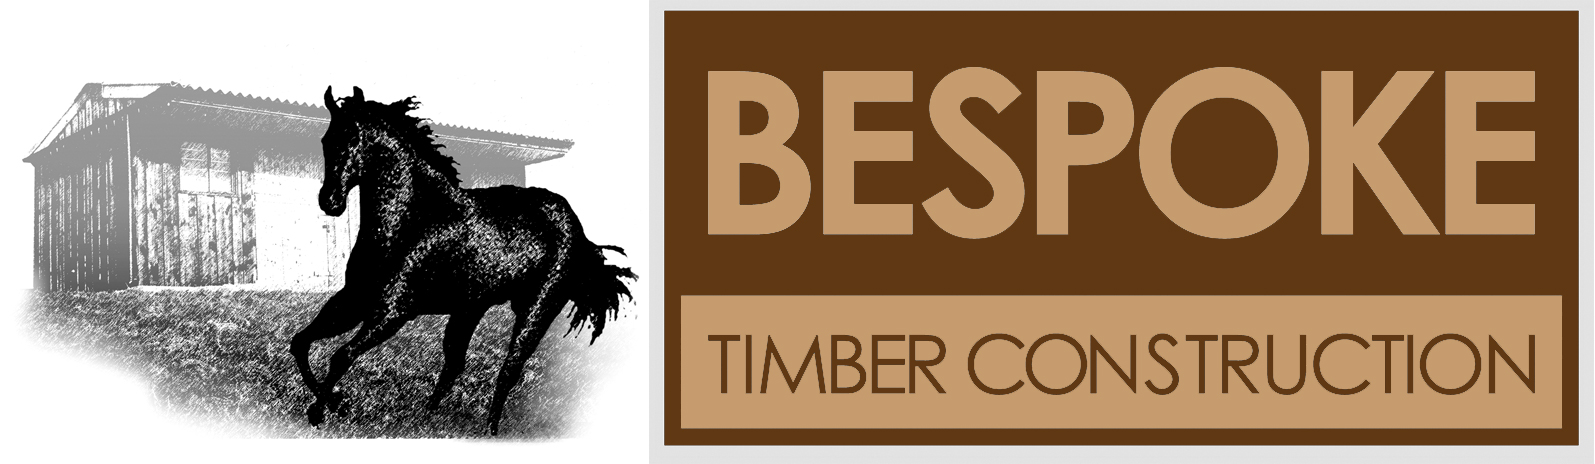 Bespoke Timber Construction Logo